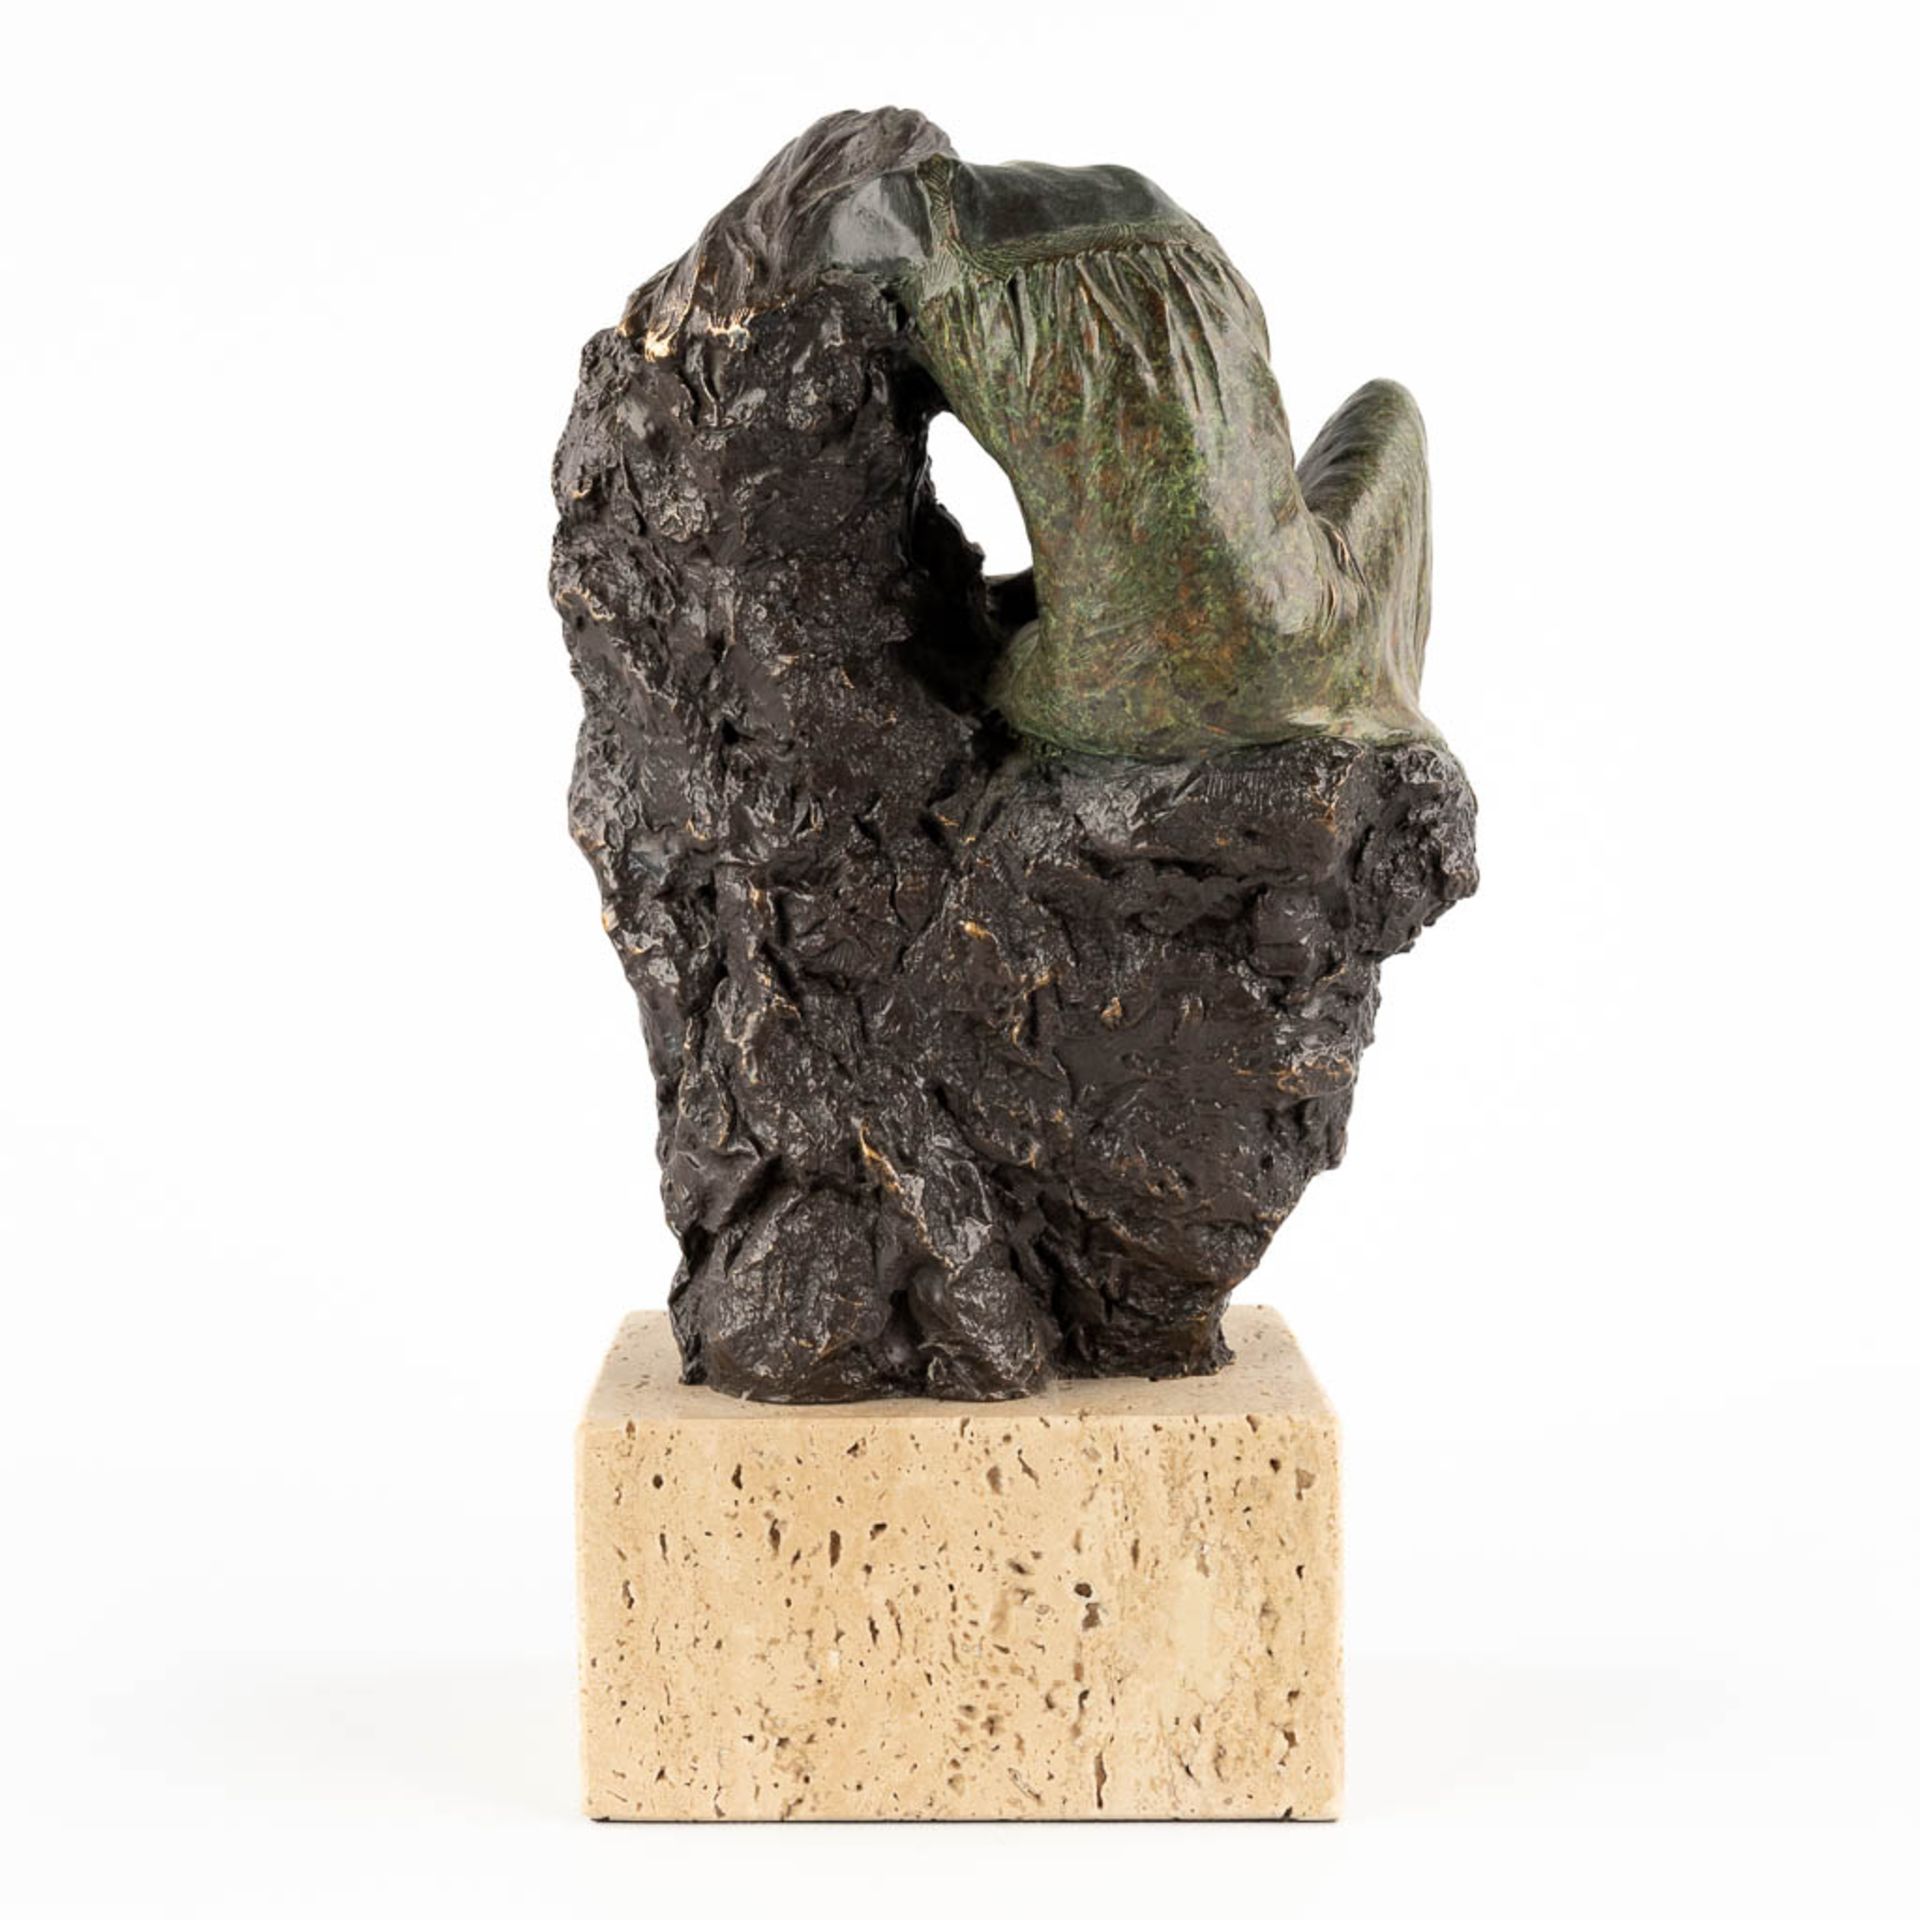 Joan MIRO (1893-1983)(after) 'Otono' patinated bronze. 286/3999. 1989. (H:22,5 cm) - Image 5 of 13